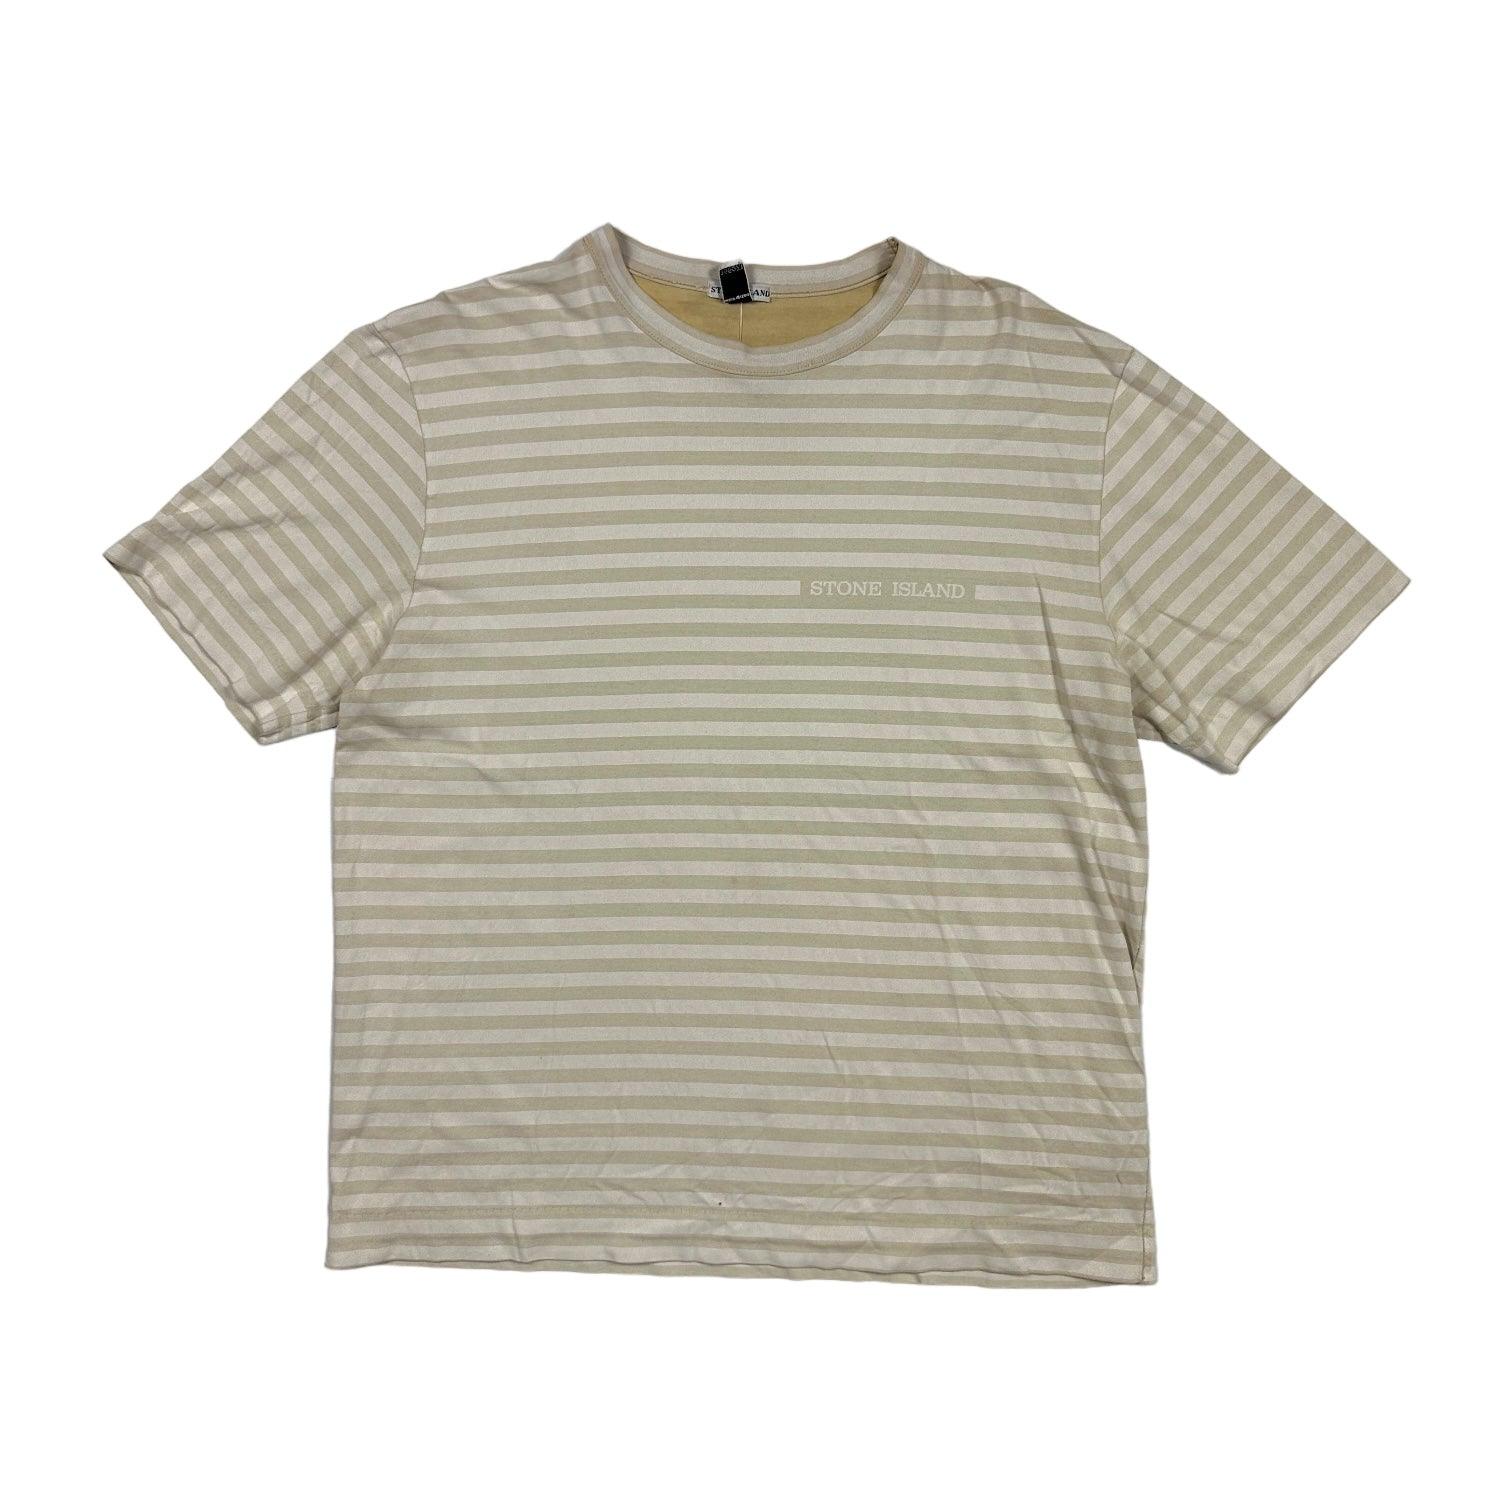 S/S 2002 Stone Island Stripe T-Shirt - Known Source